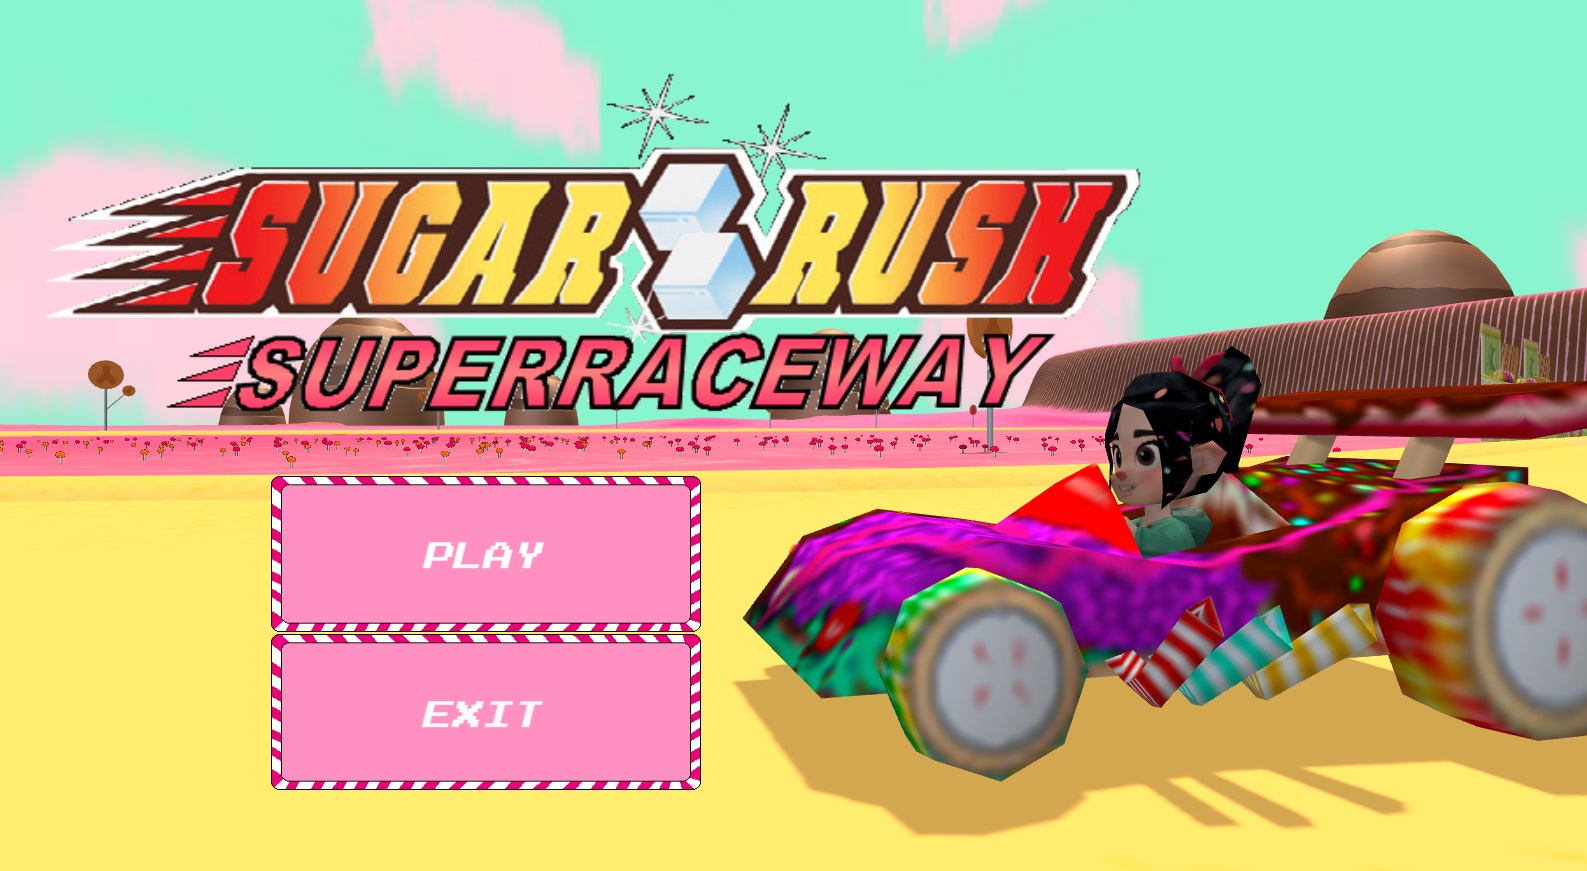 The Game Sugar Rush